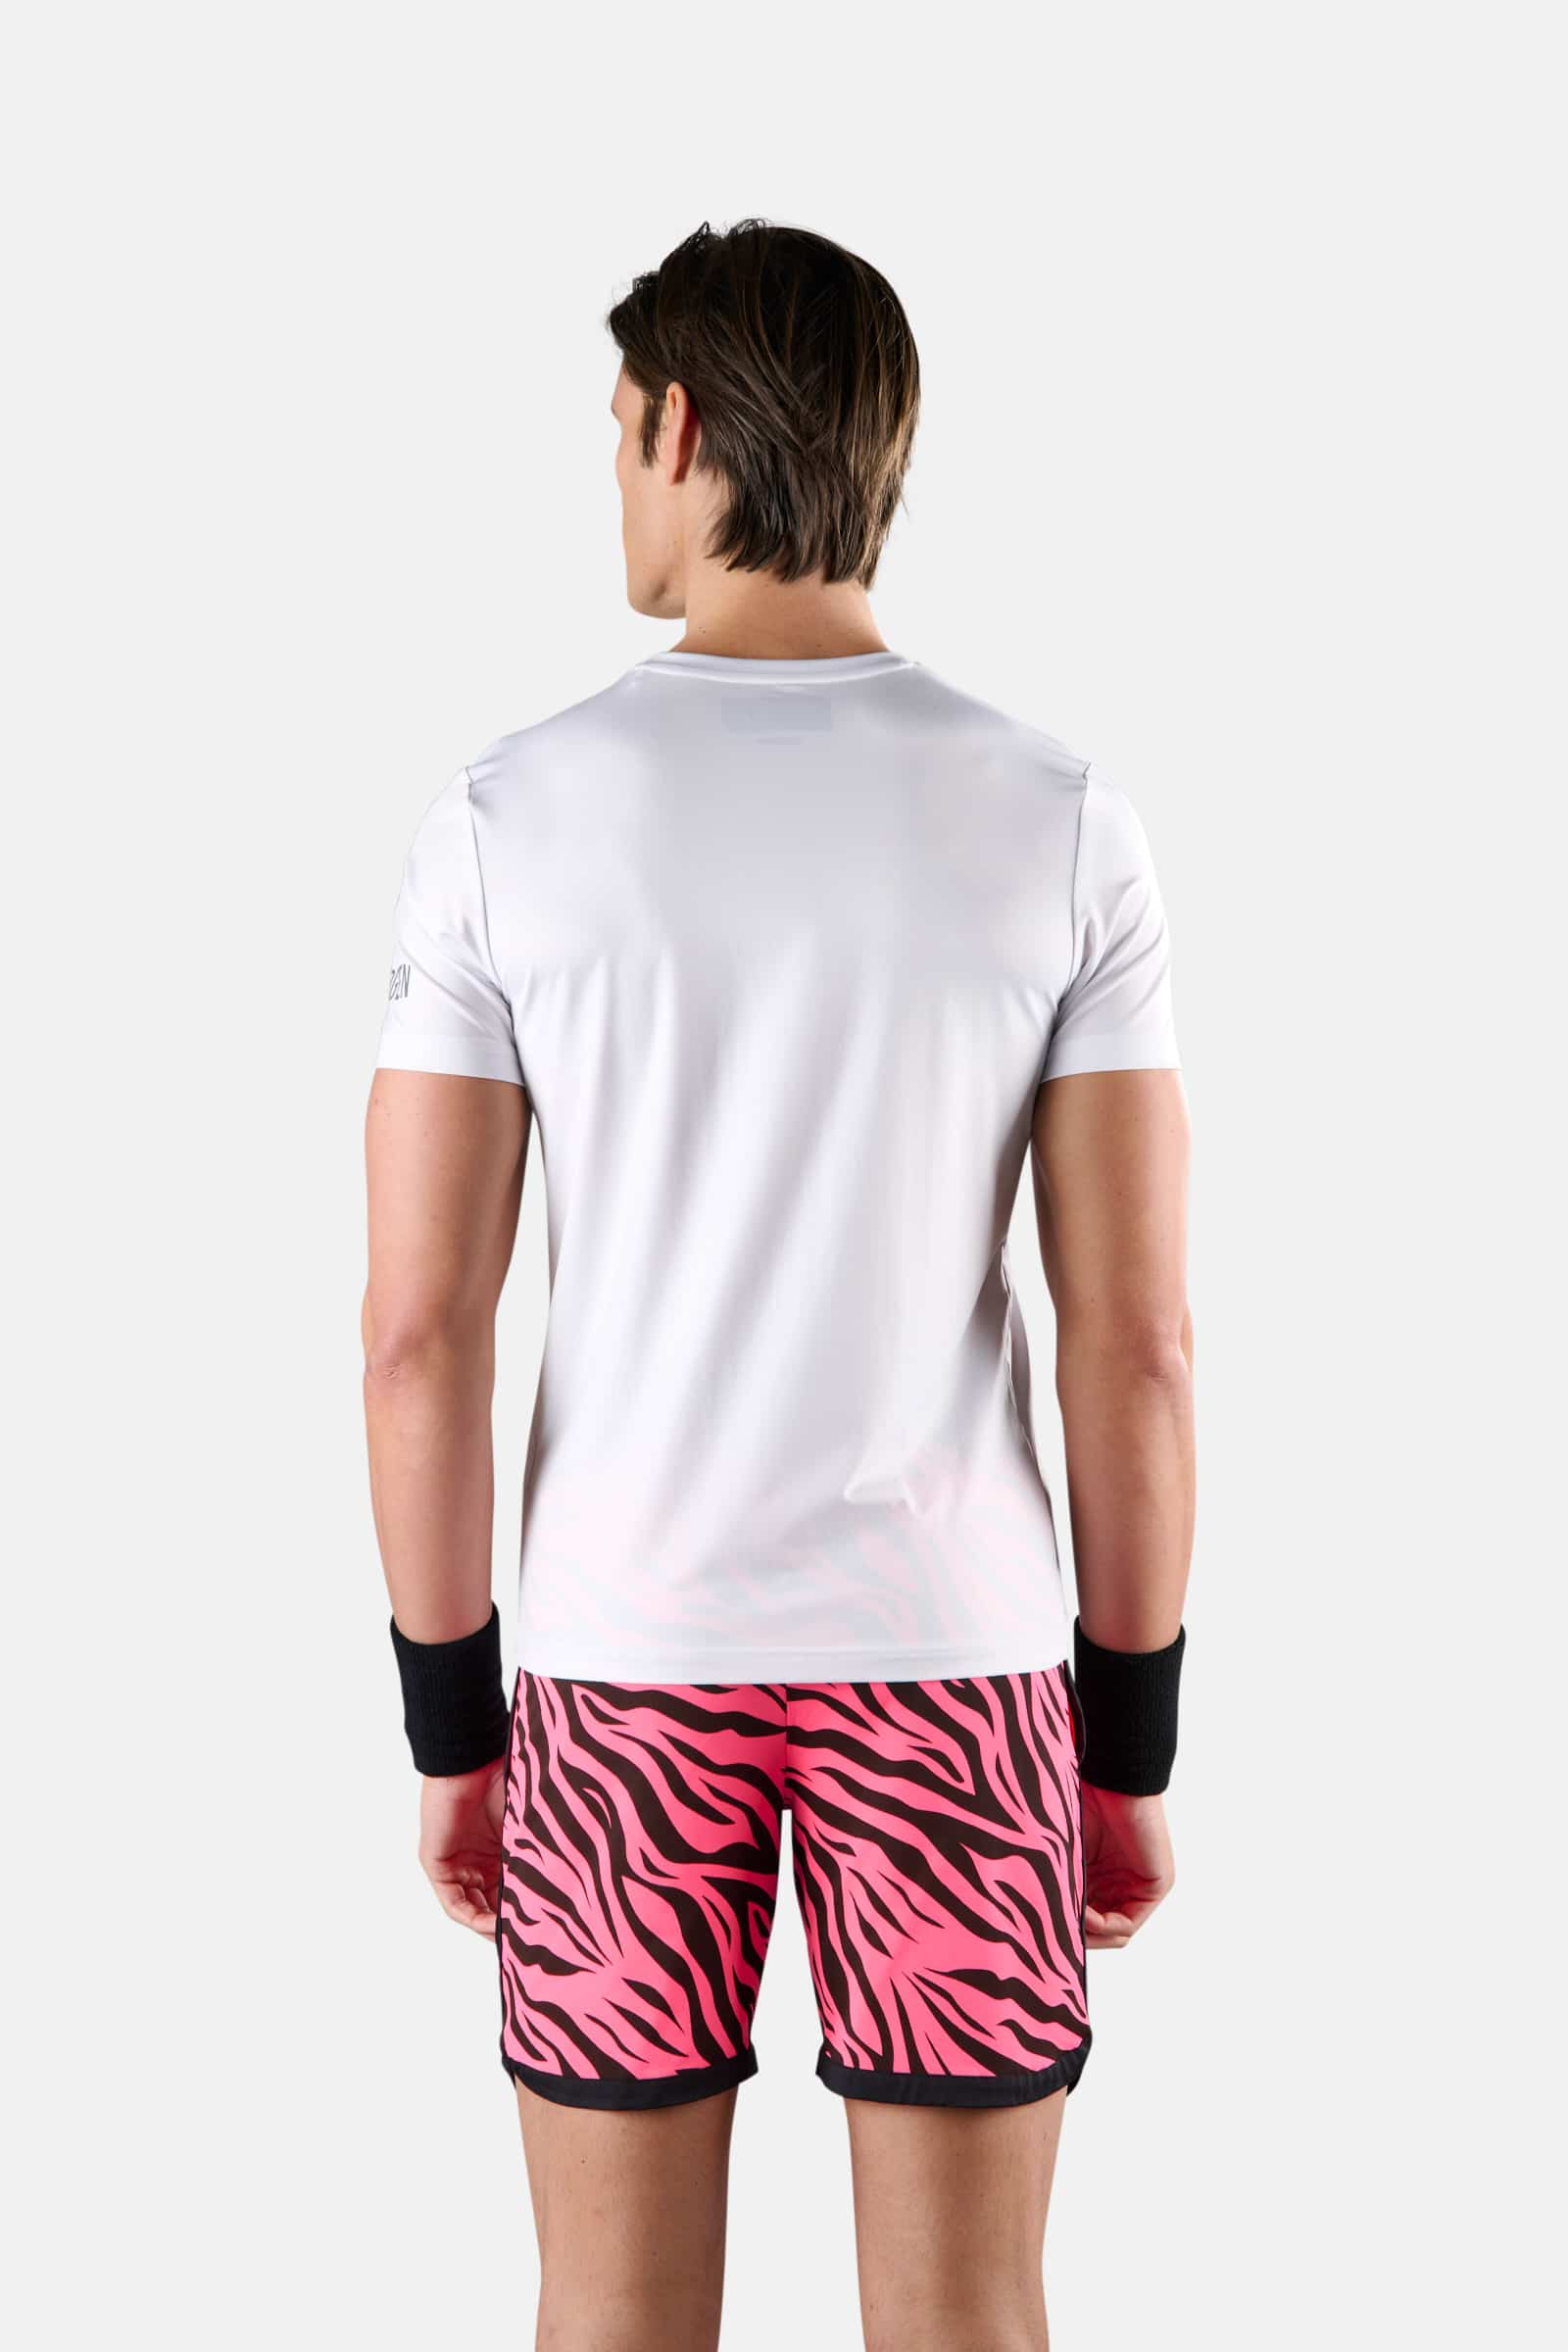 BASIC TECH TEE - WHITE - Abbigliamento sportivo | Hydrogen